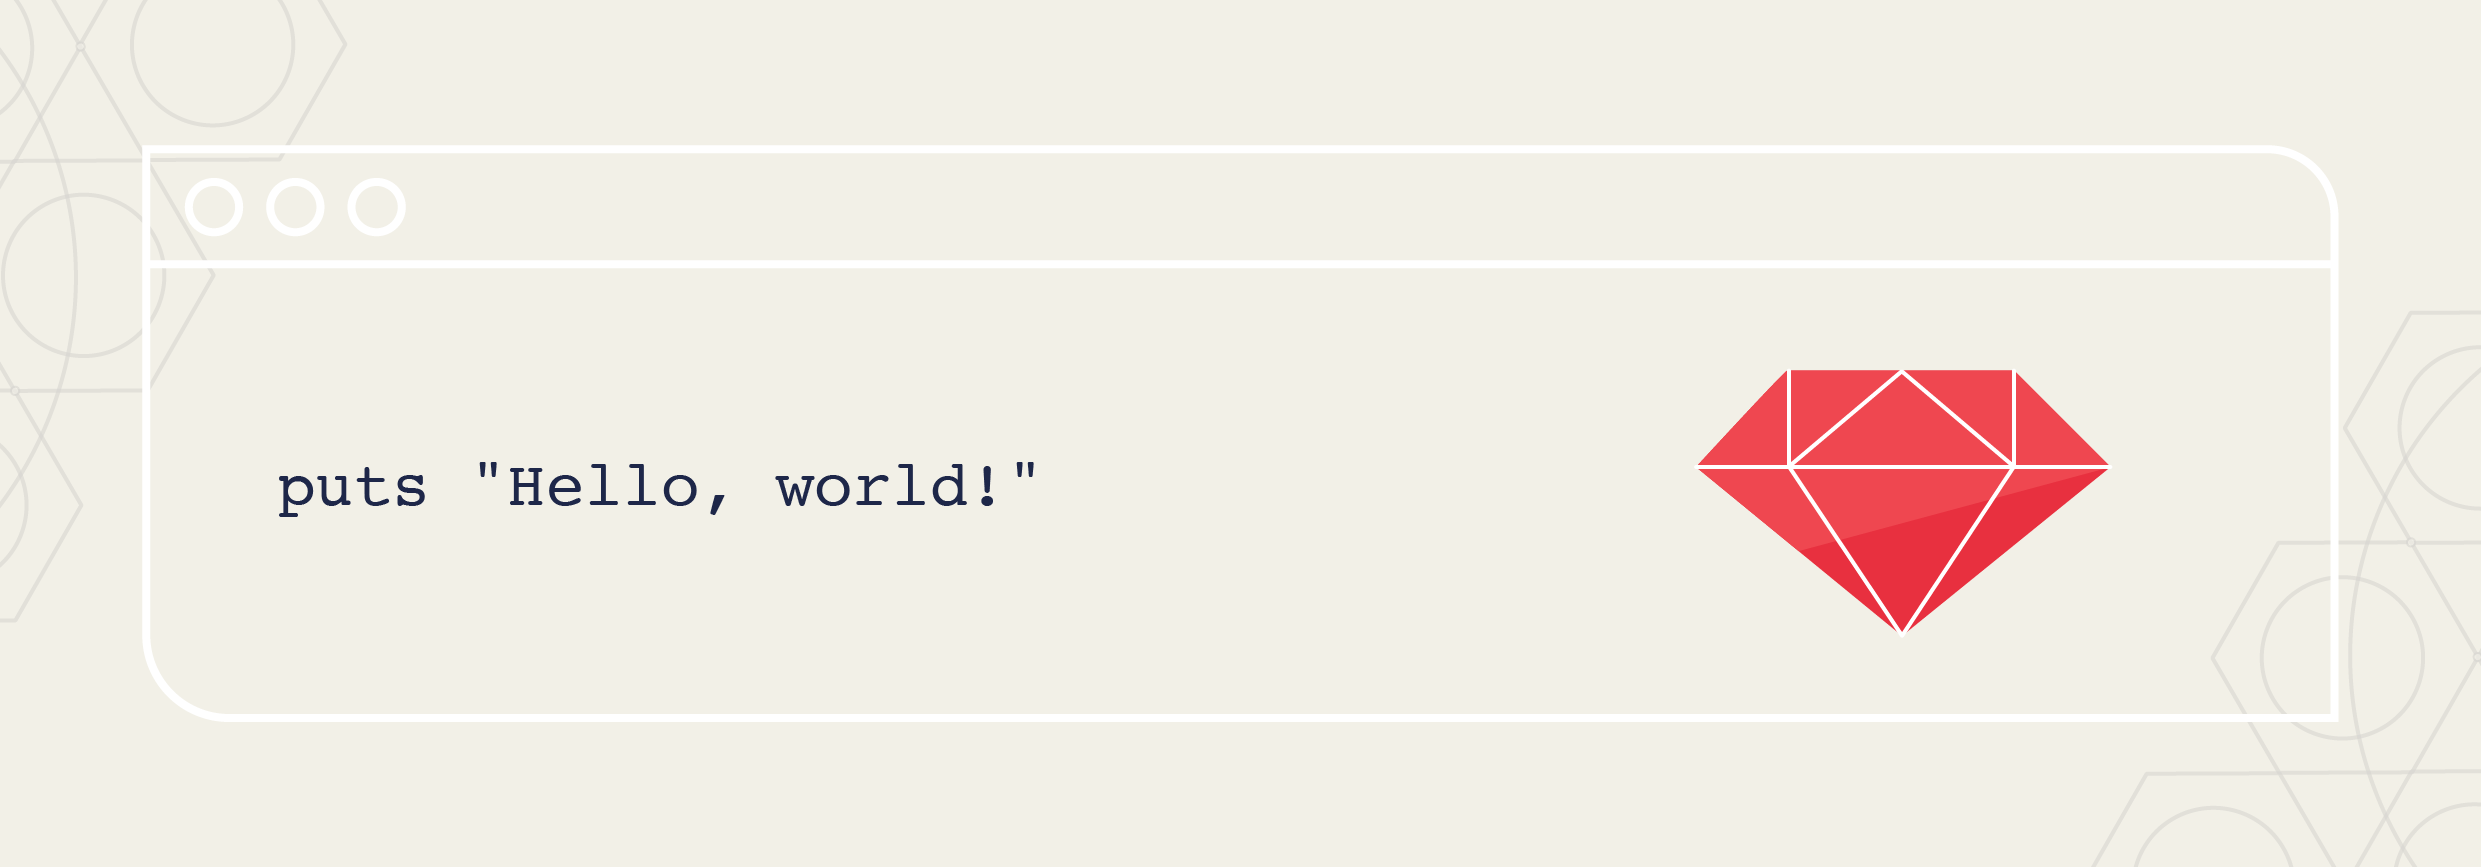 ruby programming language "hello world" code and logo